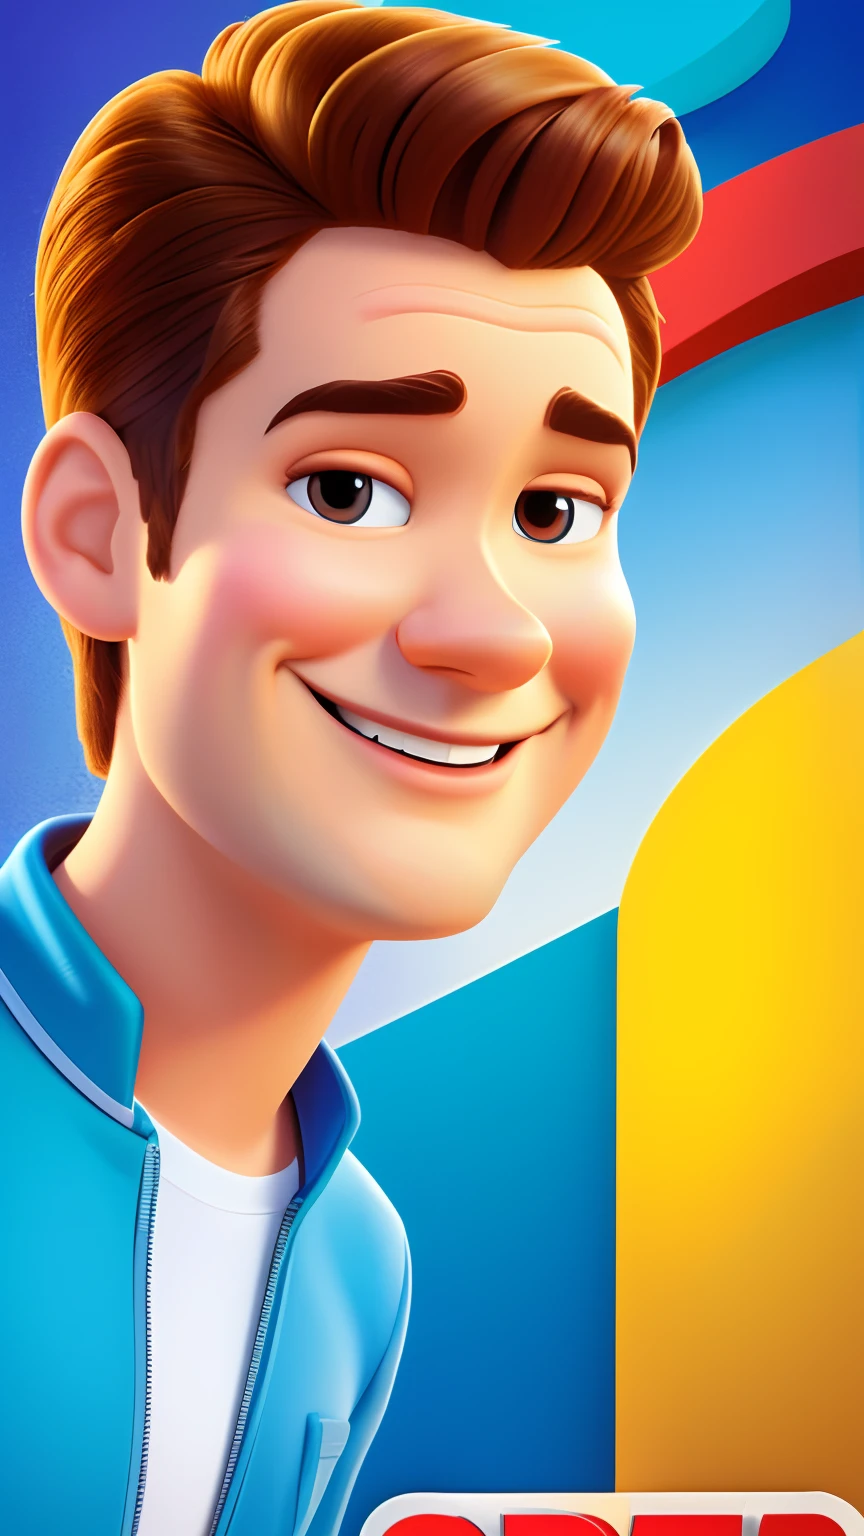 Disney Pixar style 3D rendering poster with happy and adorable man smiling, alto, magro, branco com cabelos castanhos escuros ondulados, Nariz em estilo romano.  Disney Pixar Cartoon Style Children's Animation, personagens Pixar, personagens desenho animado